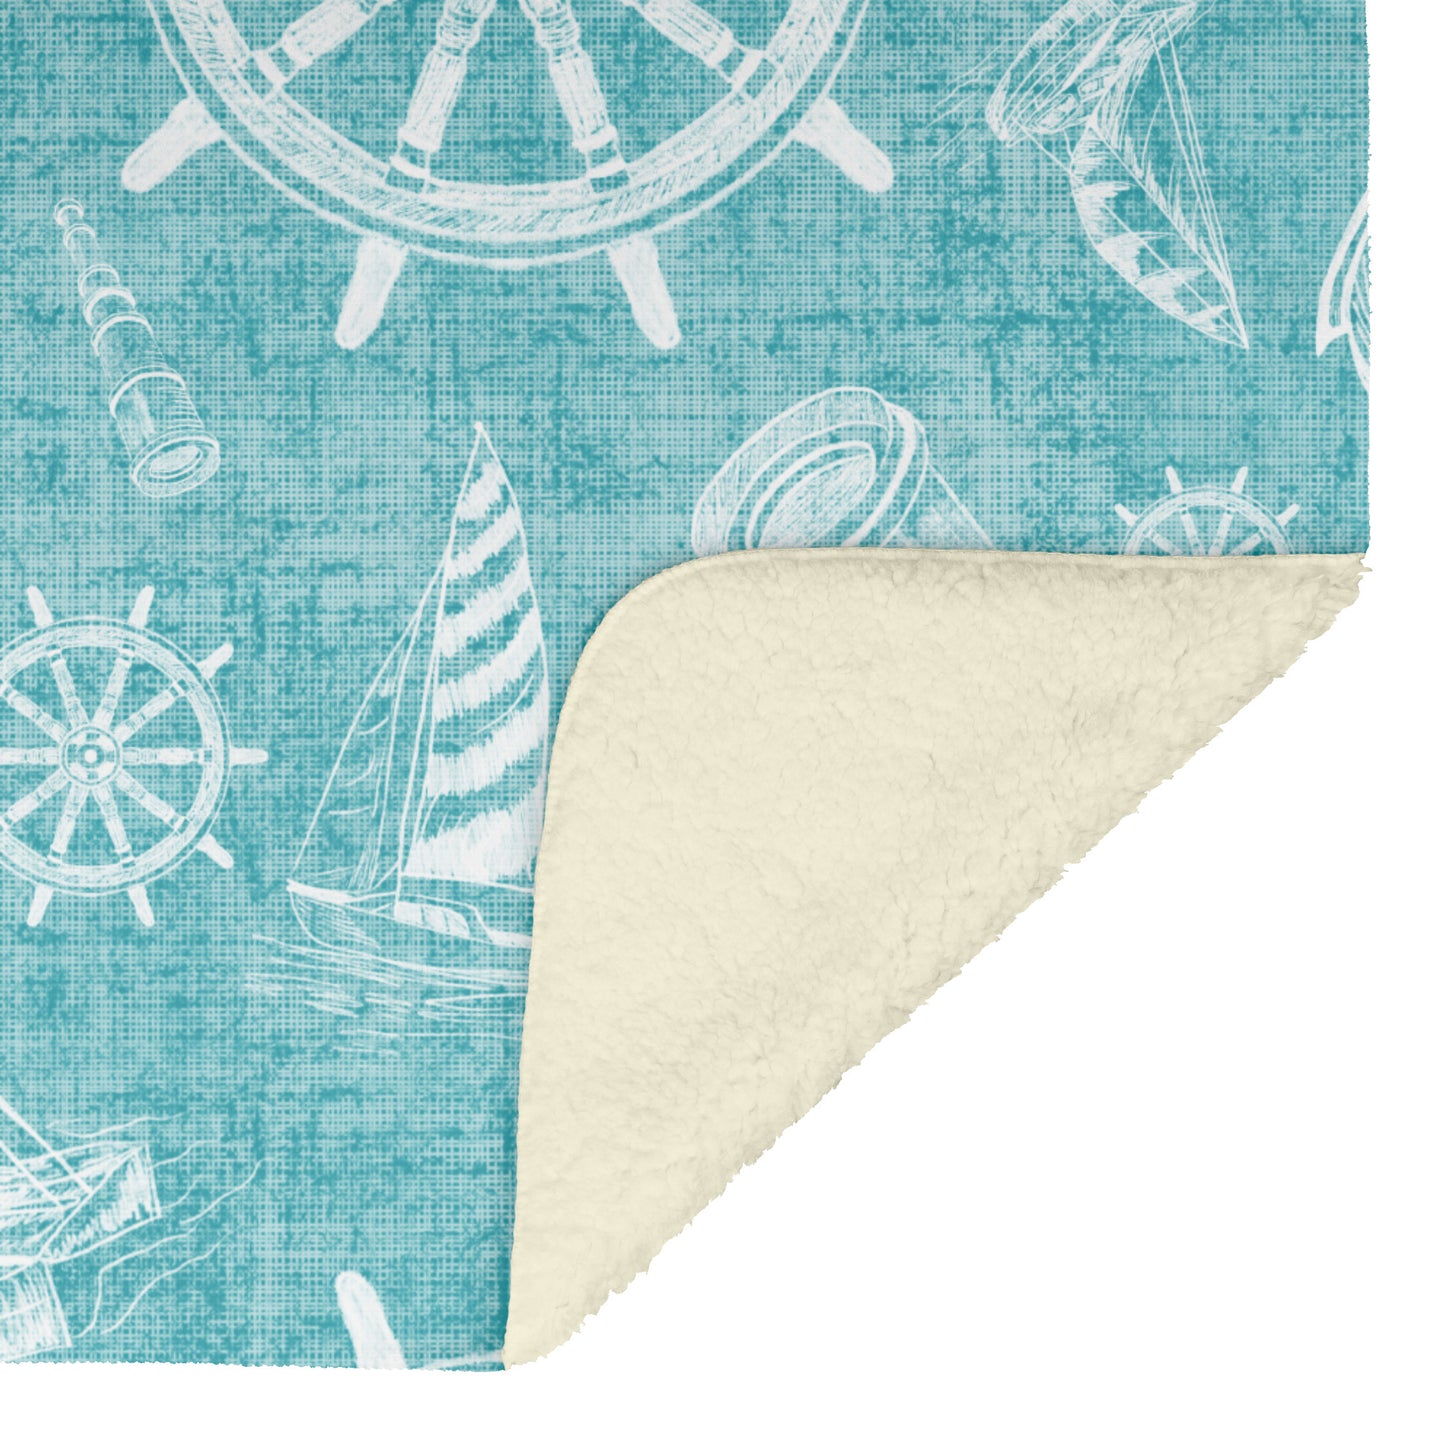 Nautical Sketches on Teal Linen Texture Background, Fleece Blanket